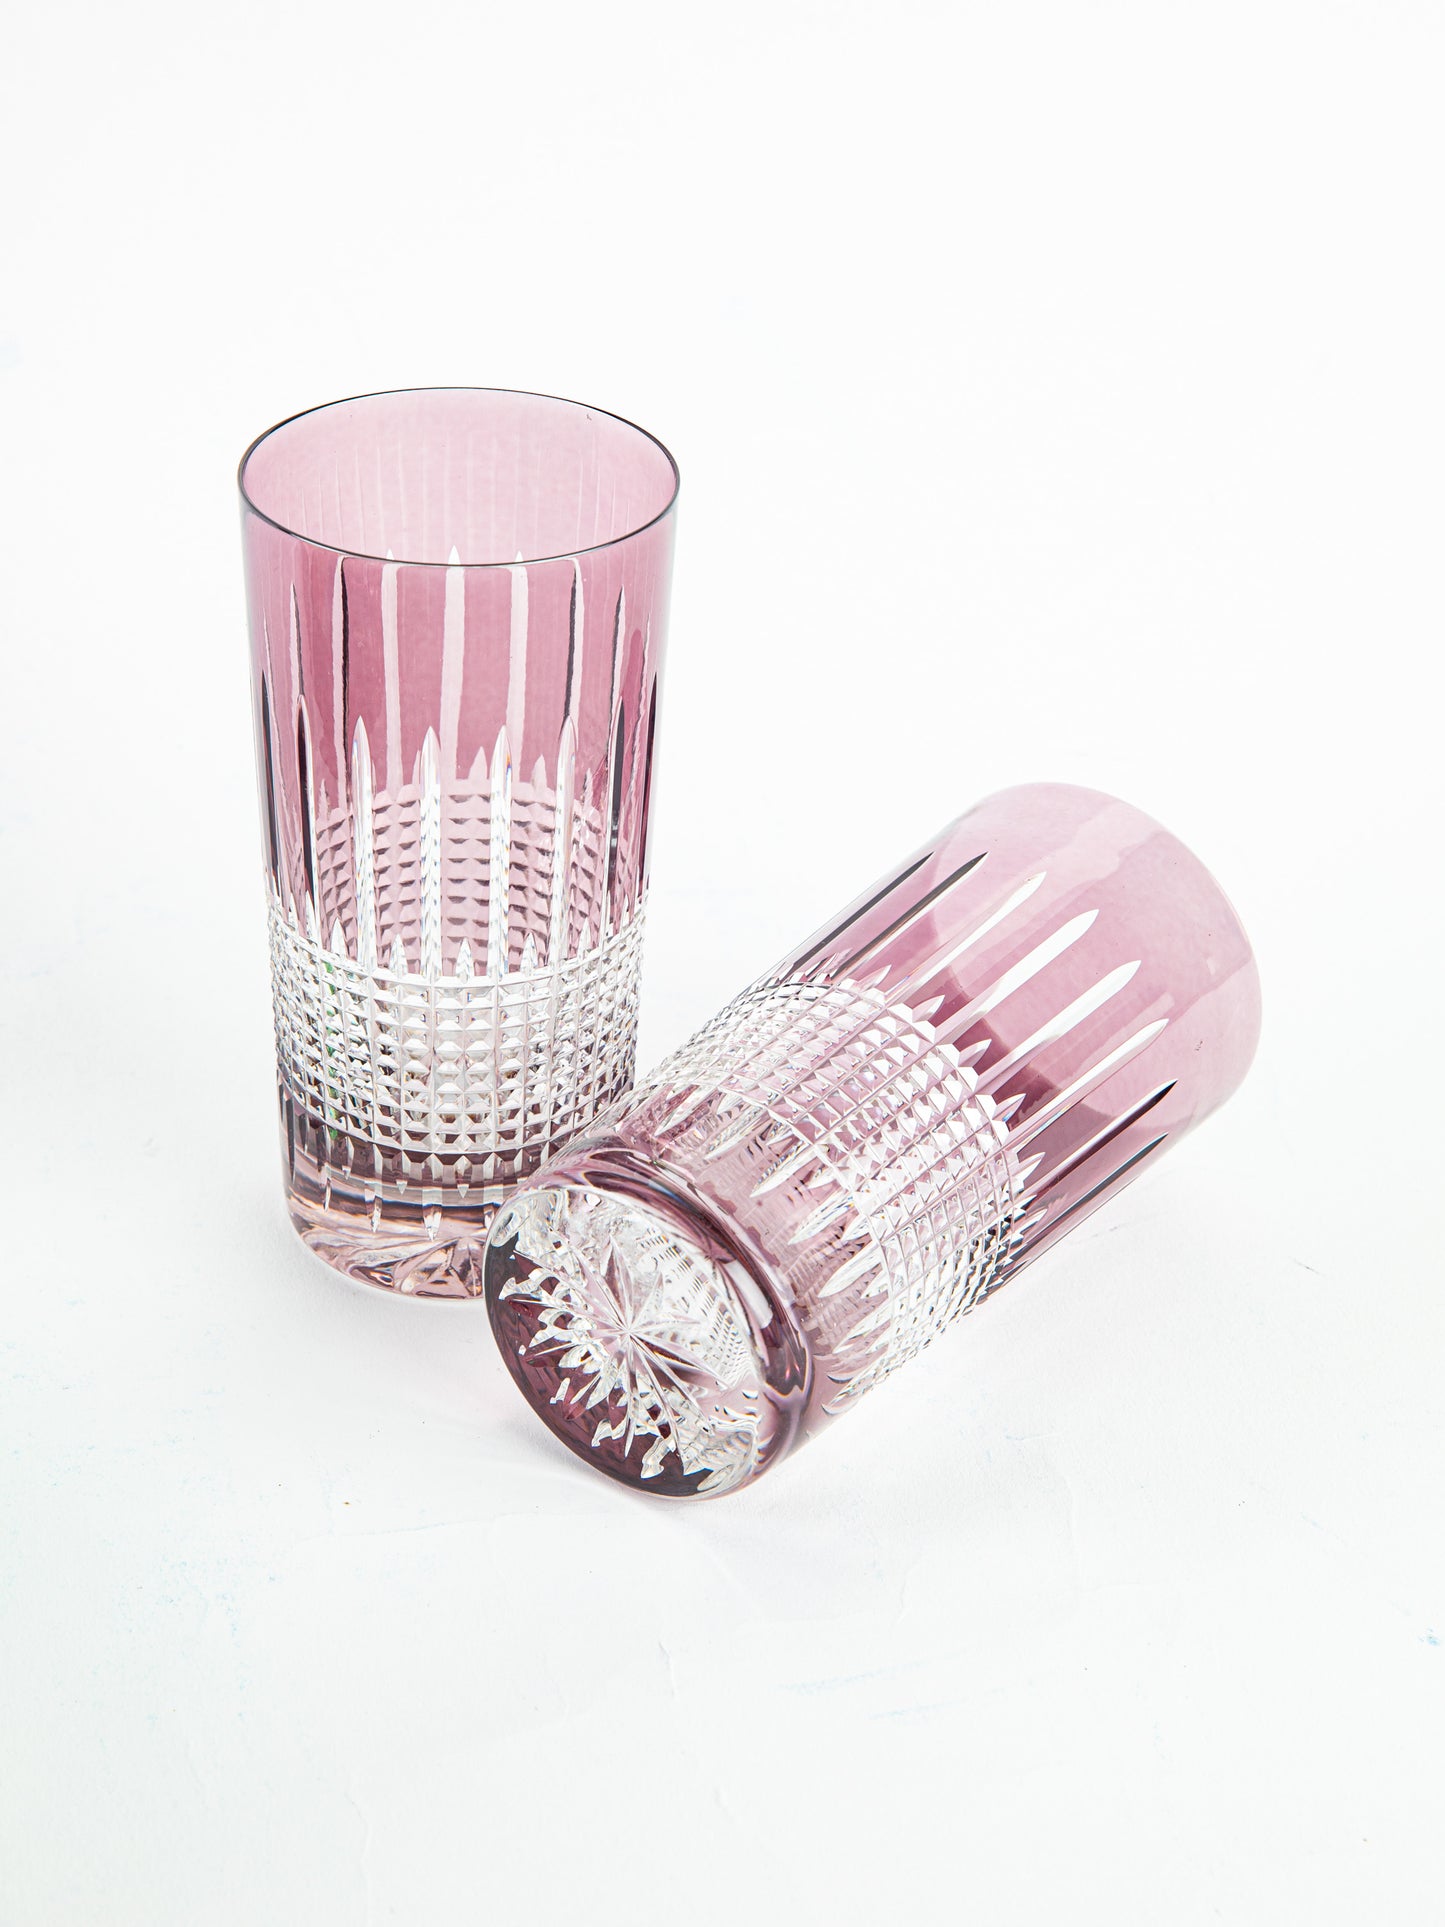 Miecz Crystal Lavender HighBall Glasses- Set of 2